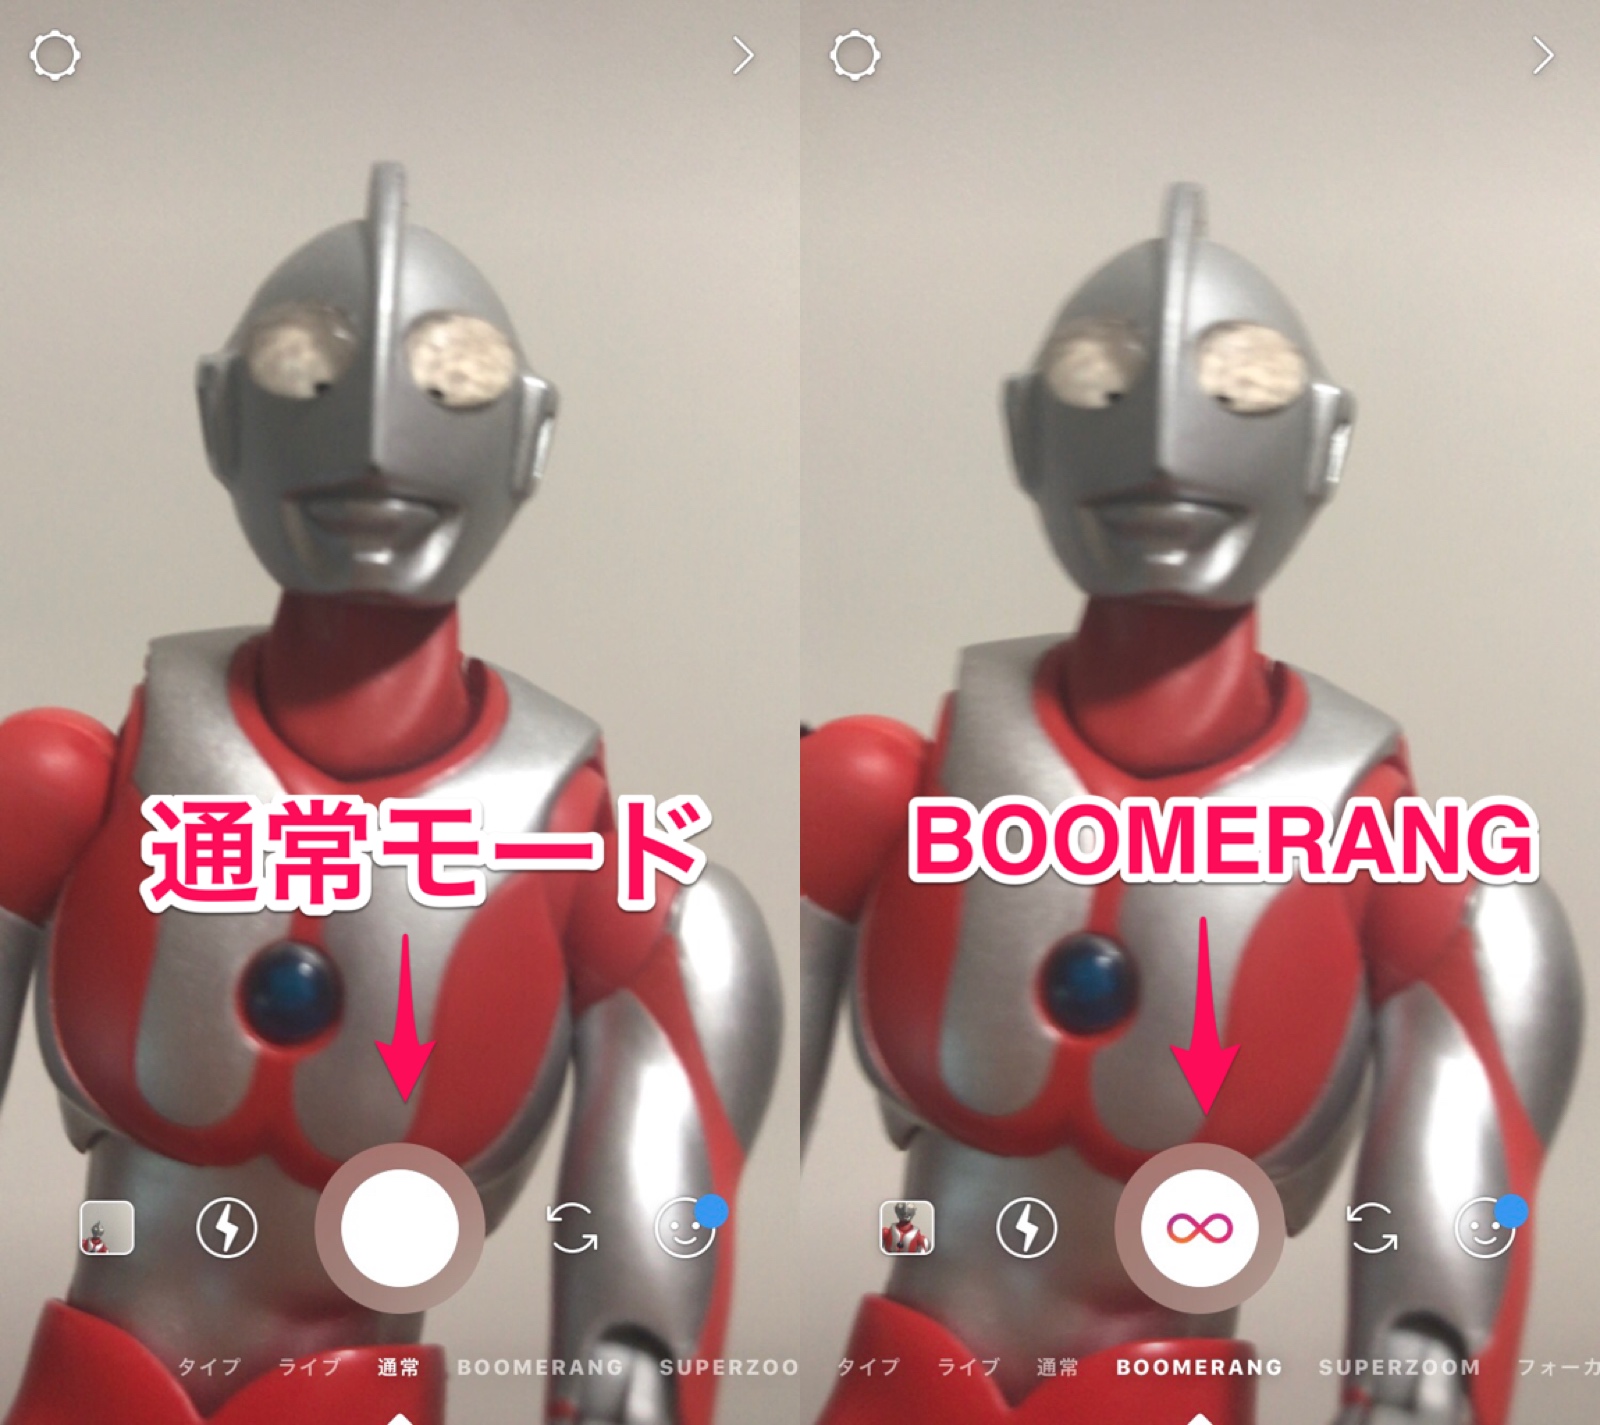 Instagram インスタストーリー Boomerang ブーメラン の使い方 九州dandy